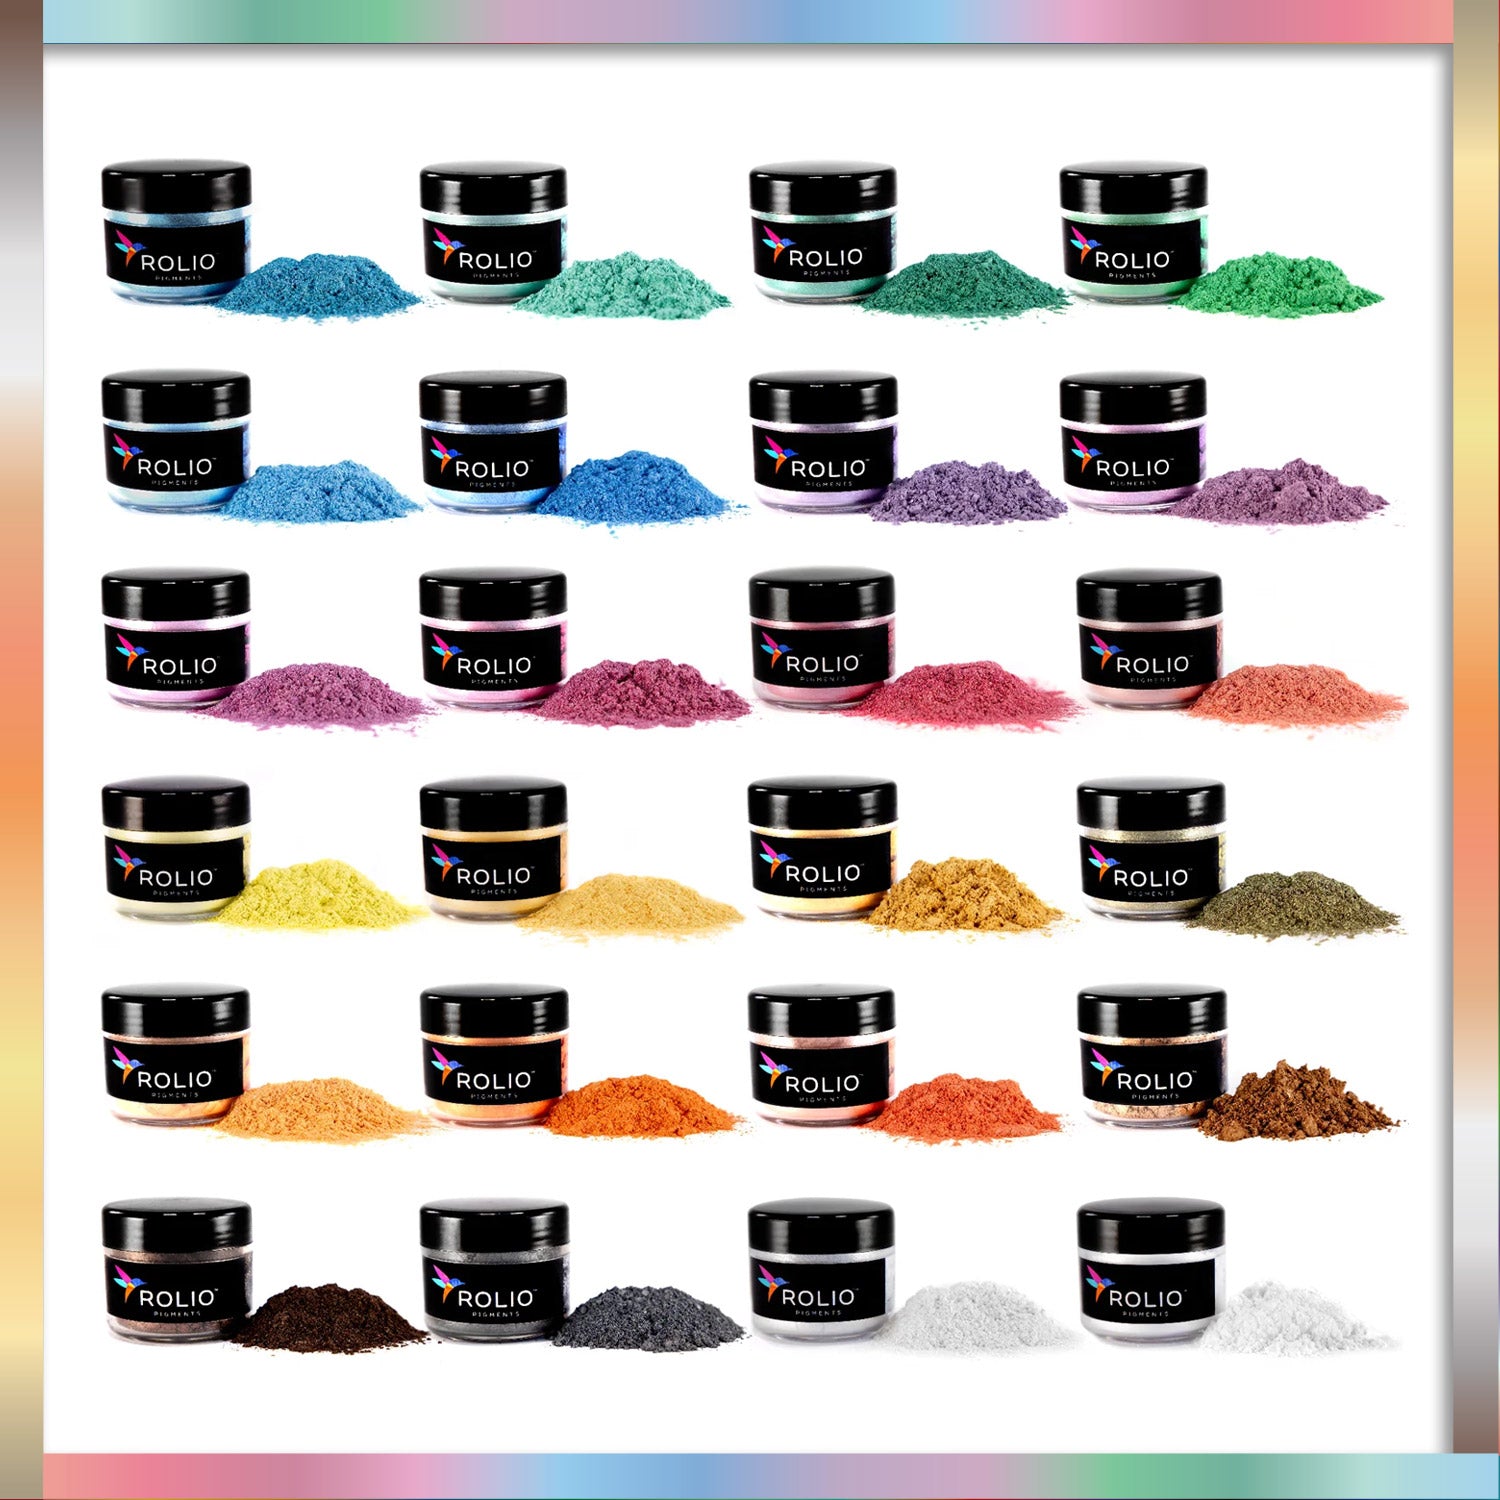 NOSTOSON Mica Powder, 24 Colors Mica Pigment Powder Dyes for